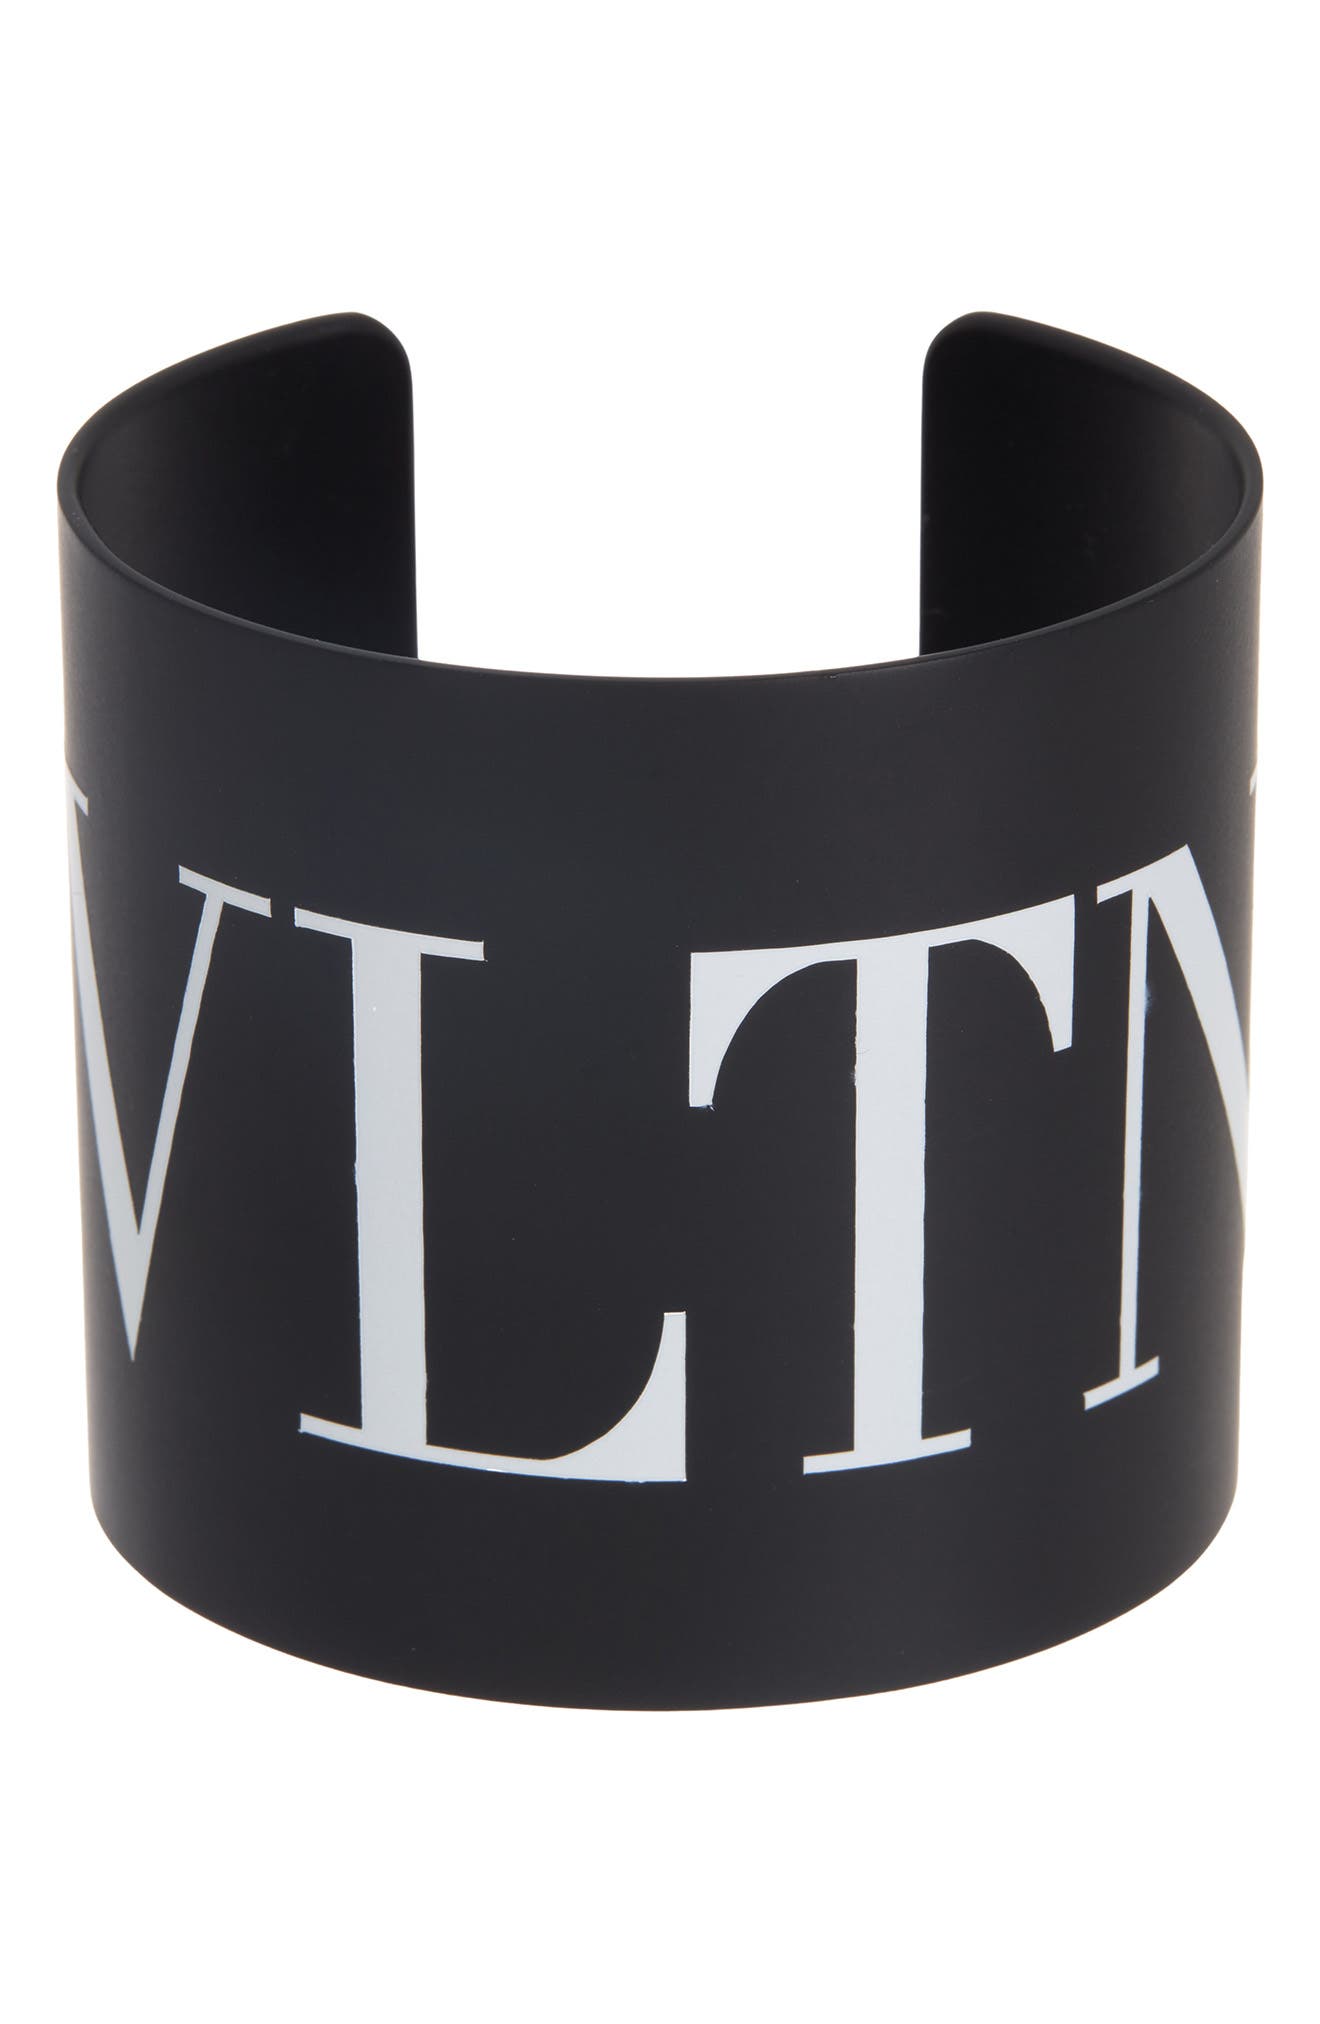 Valentino Garavani Vltn Large Cuff Bracelet In Nero/bianco